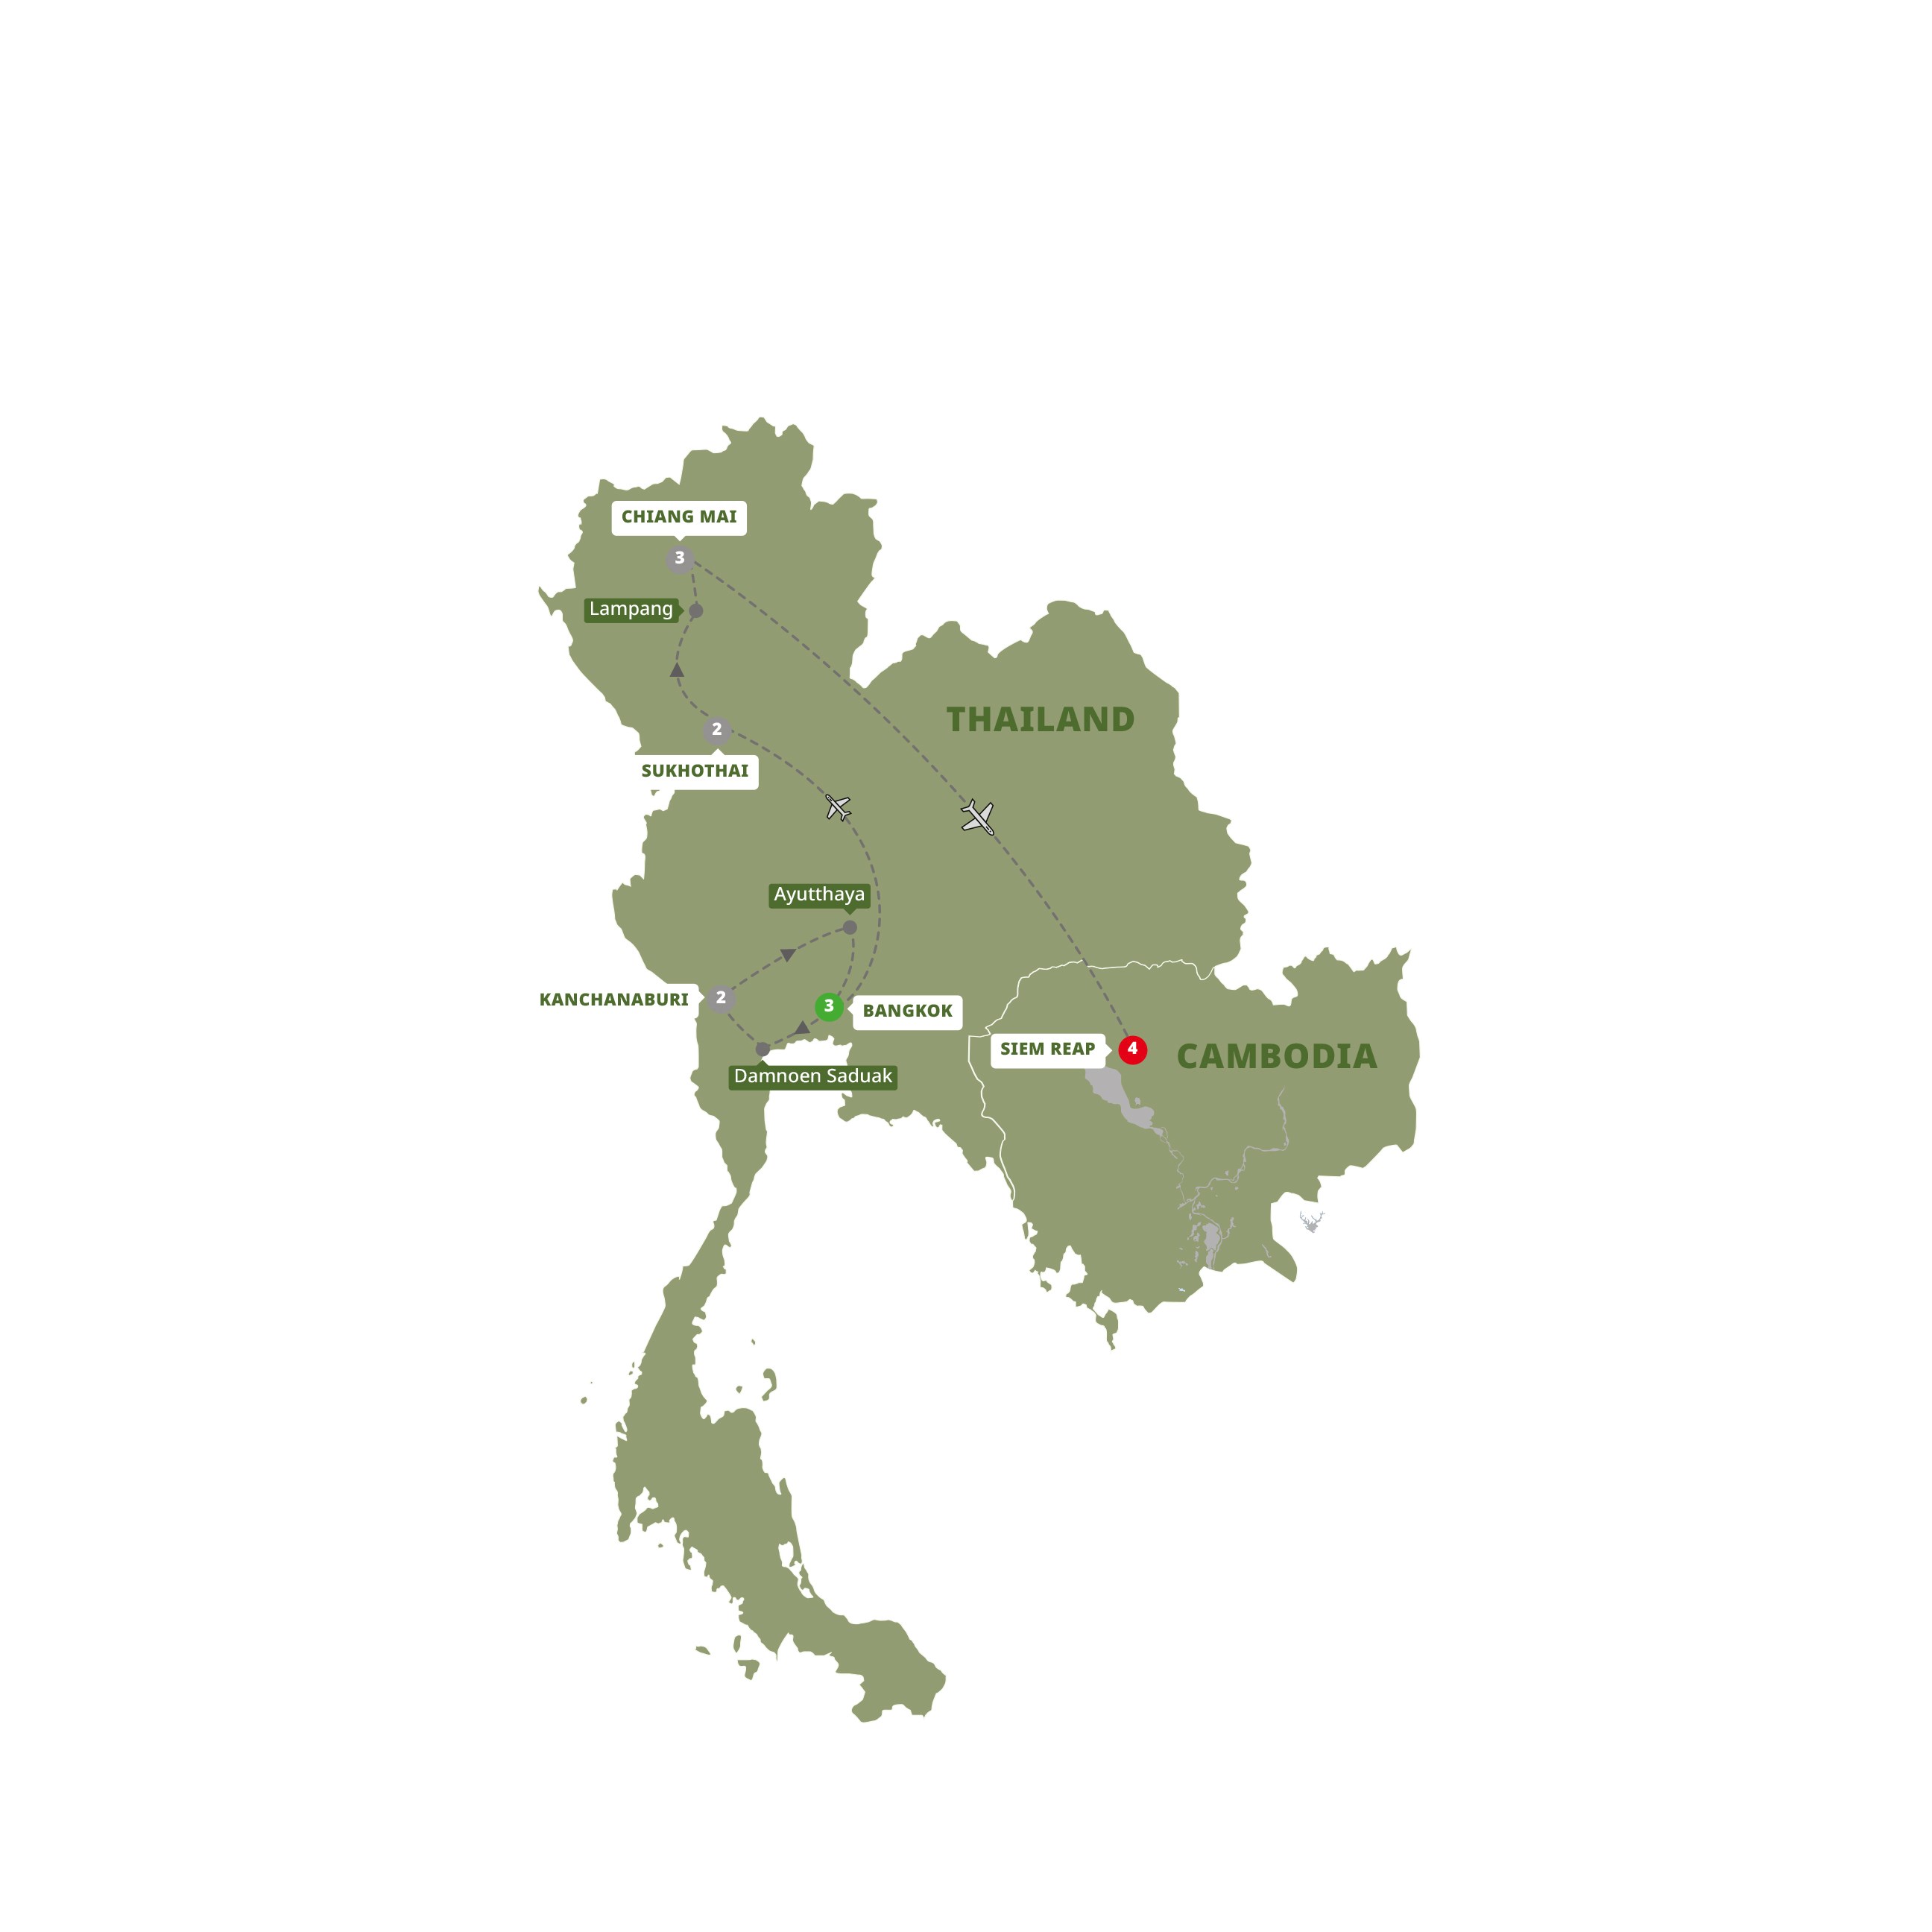 tourhub | Trafalgar | Thailand and the Temples of Angkor | Tour Map